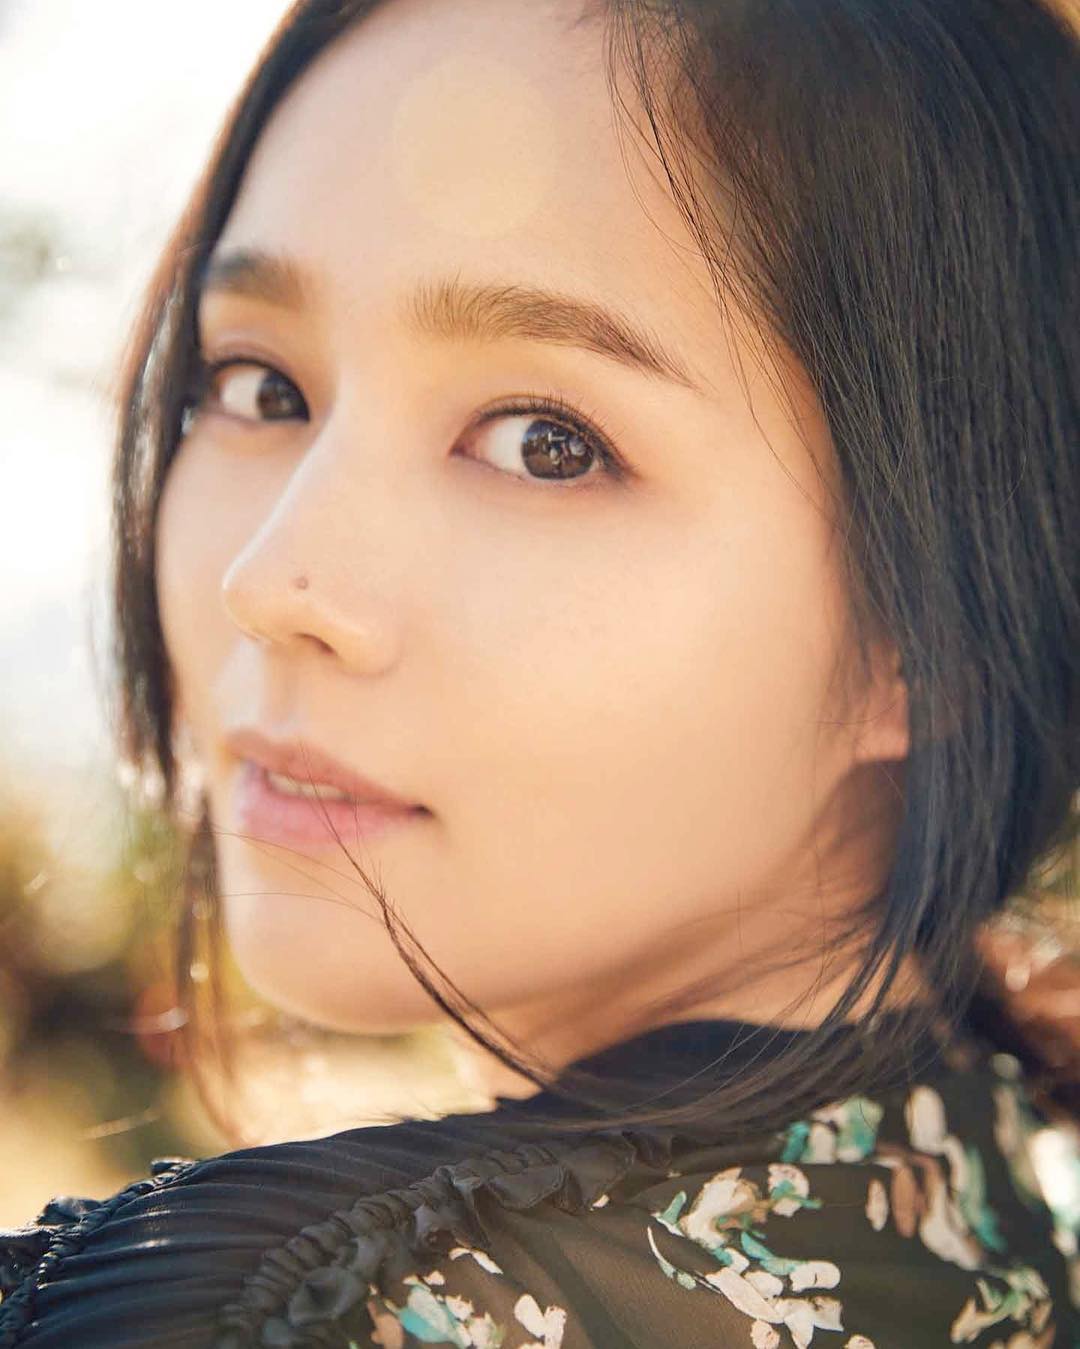 Han Ga in south korean actress 5